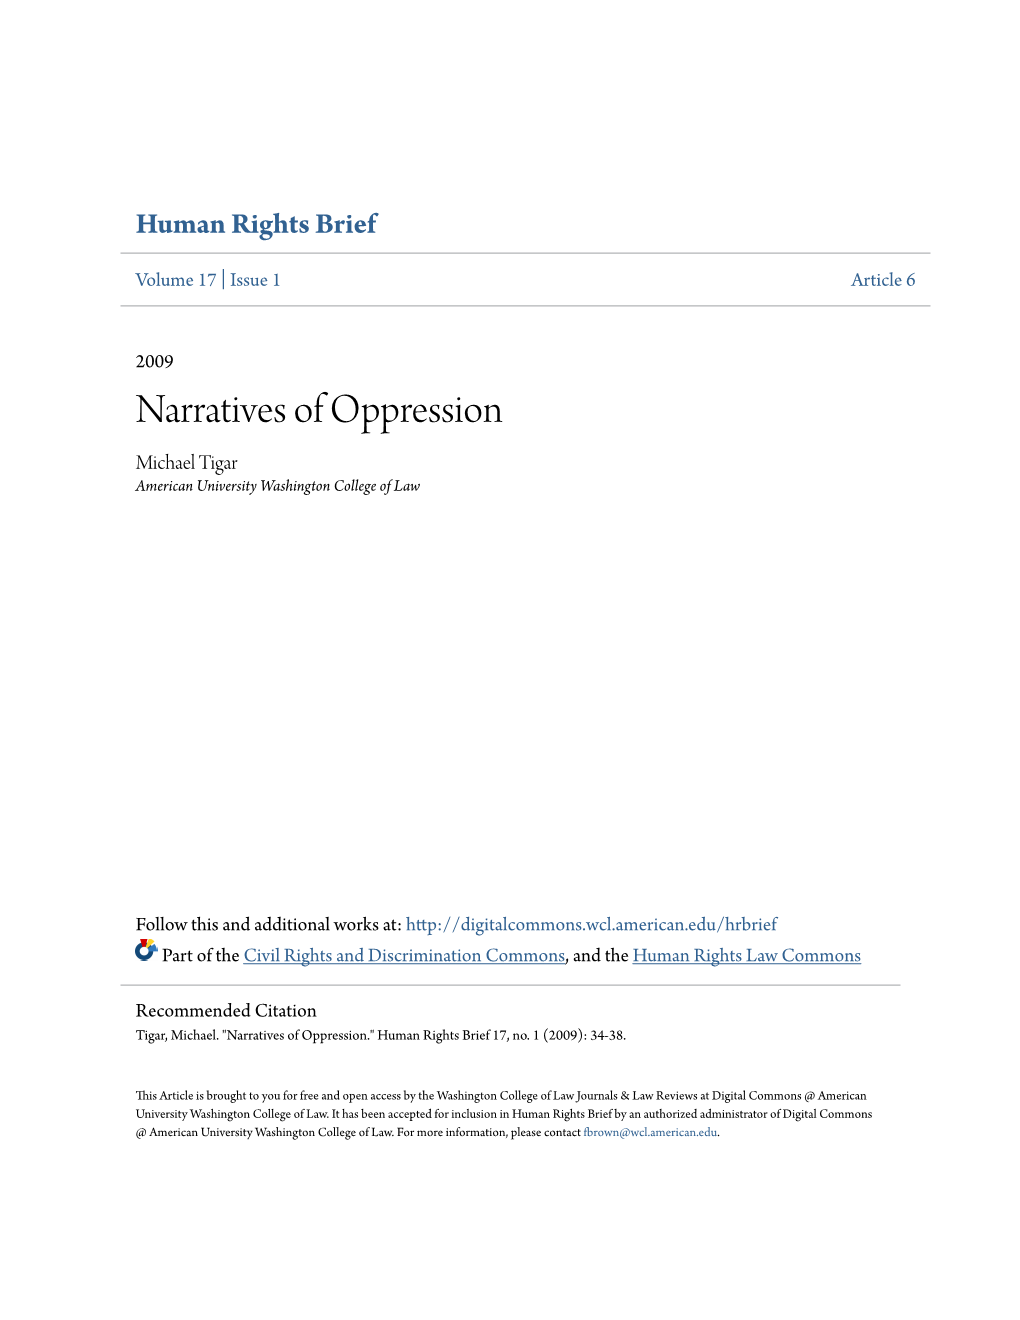 Narratives of Oppression Michael Tigar American University Washington College of Law